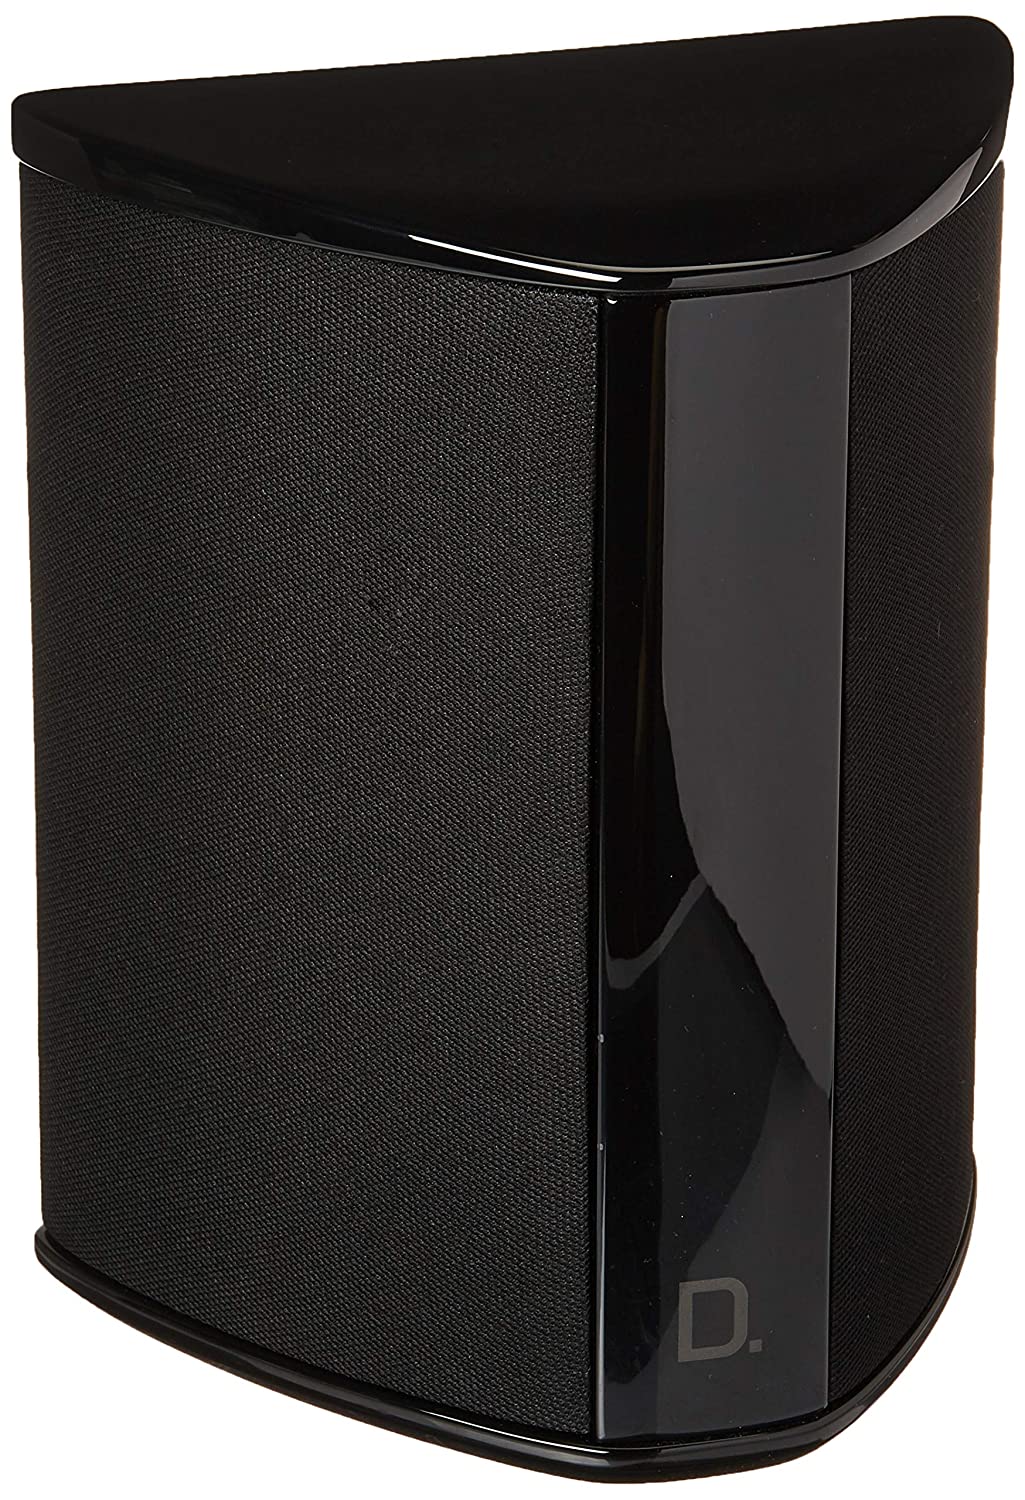 Definitive Technology SR-9040 10” Bipolar Surround Speaker